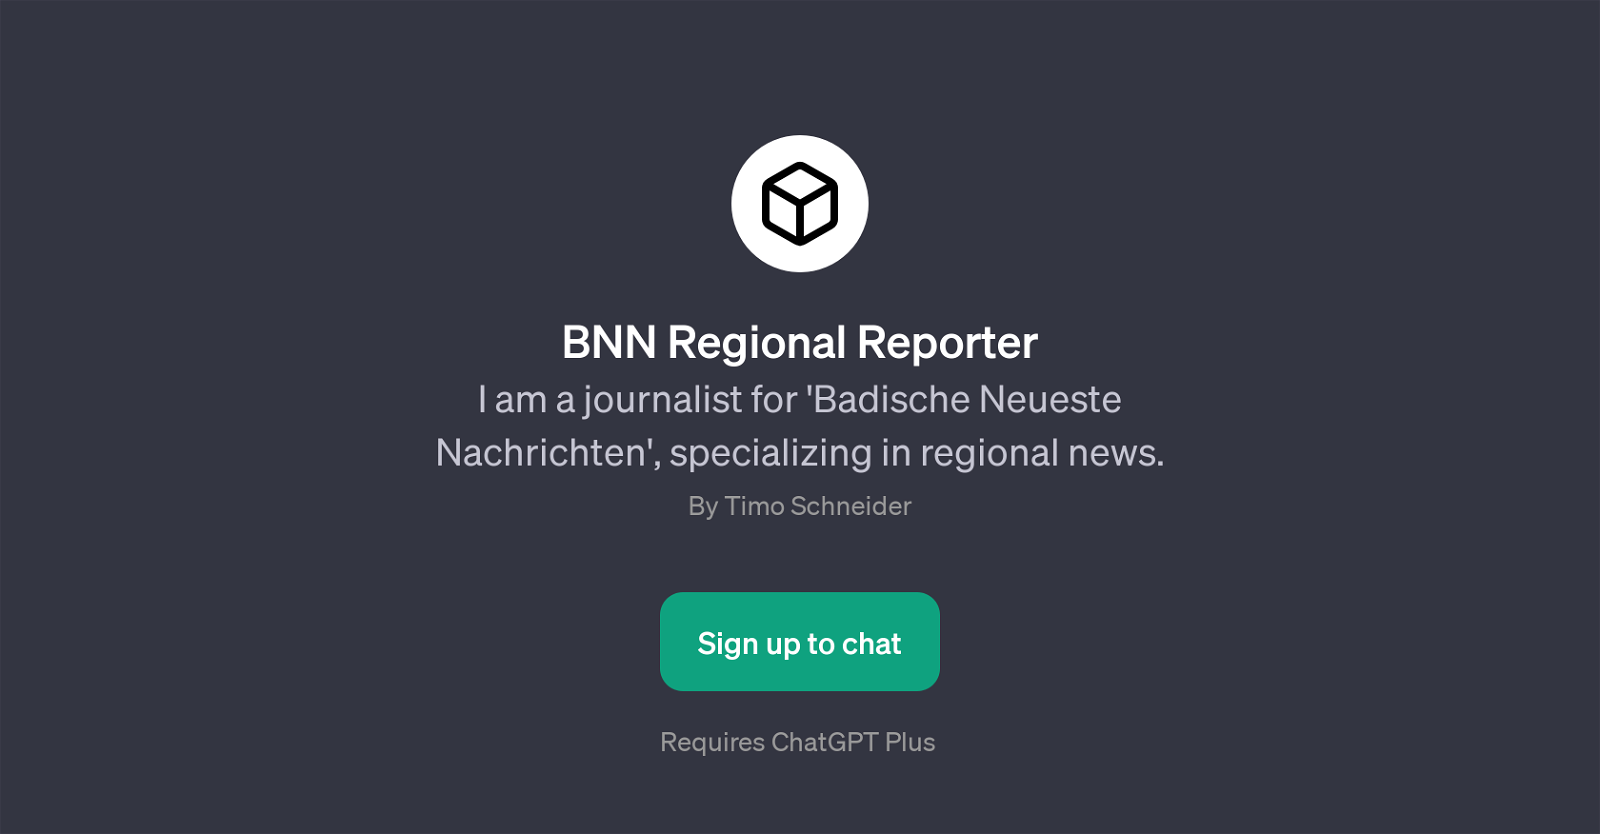 BNN Regional Reporter website